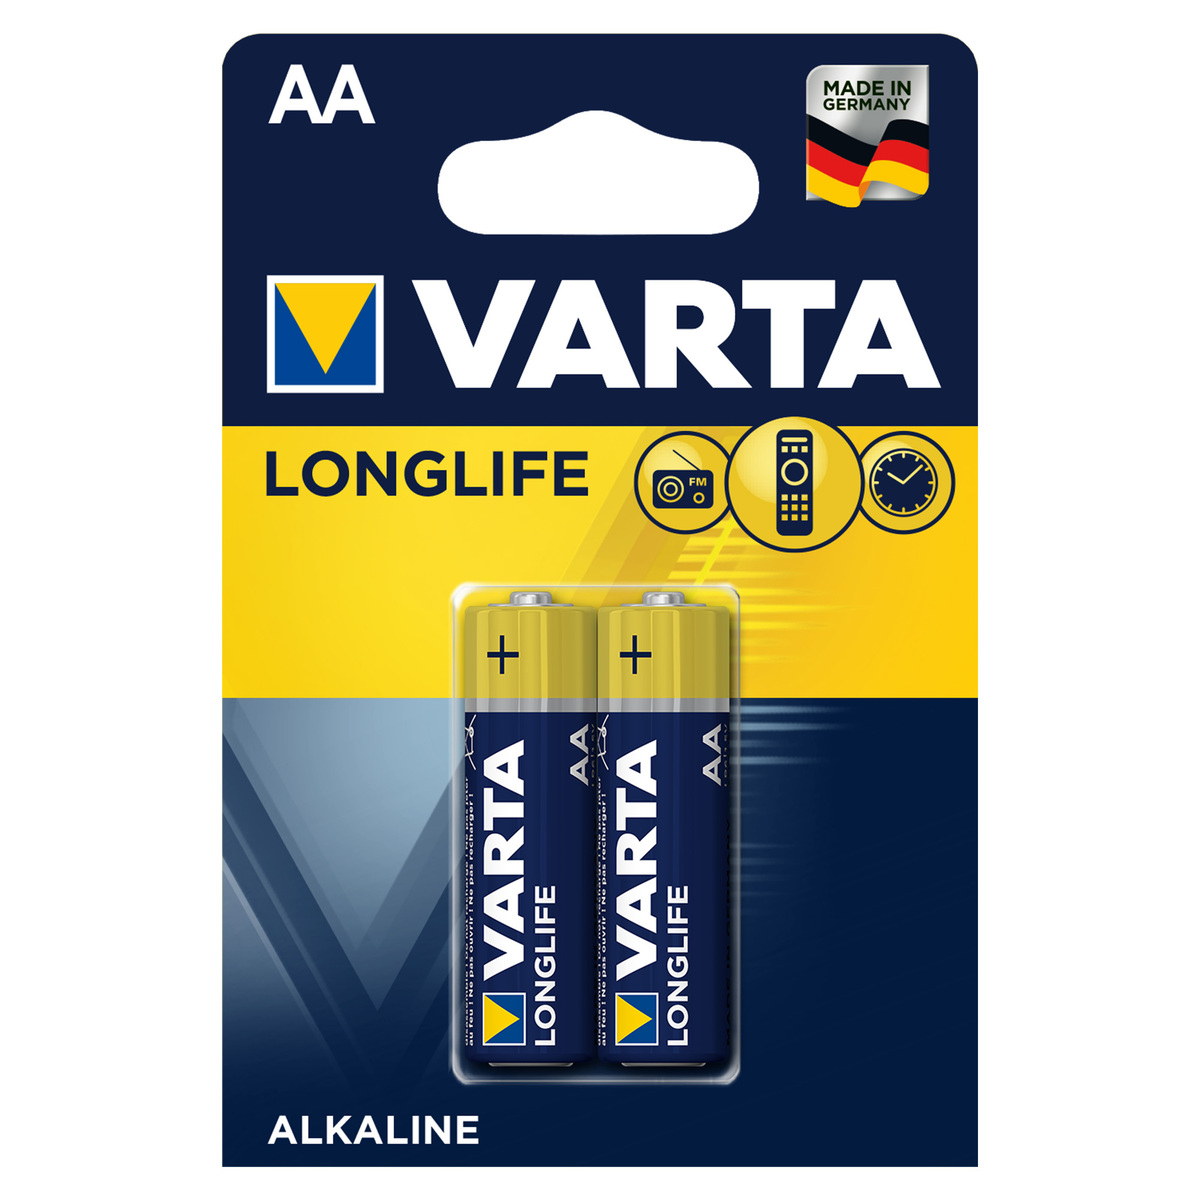 Varta Long Life AA Alkaline Battery  2pcs